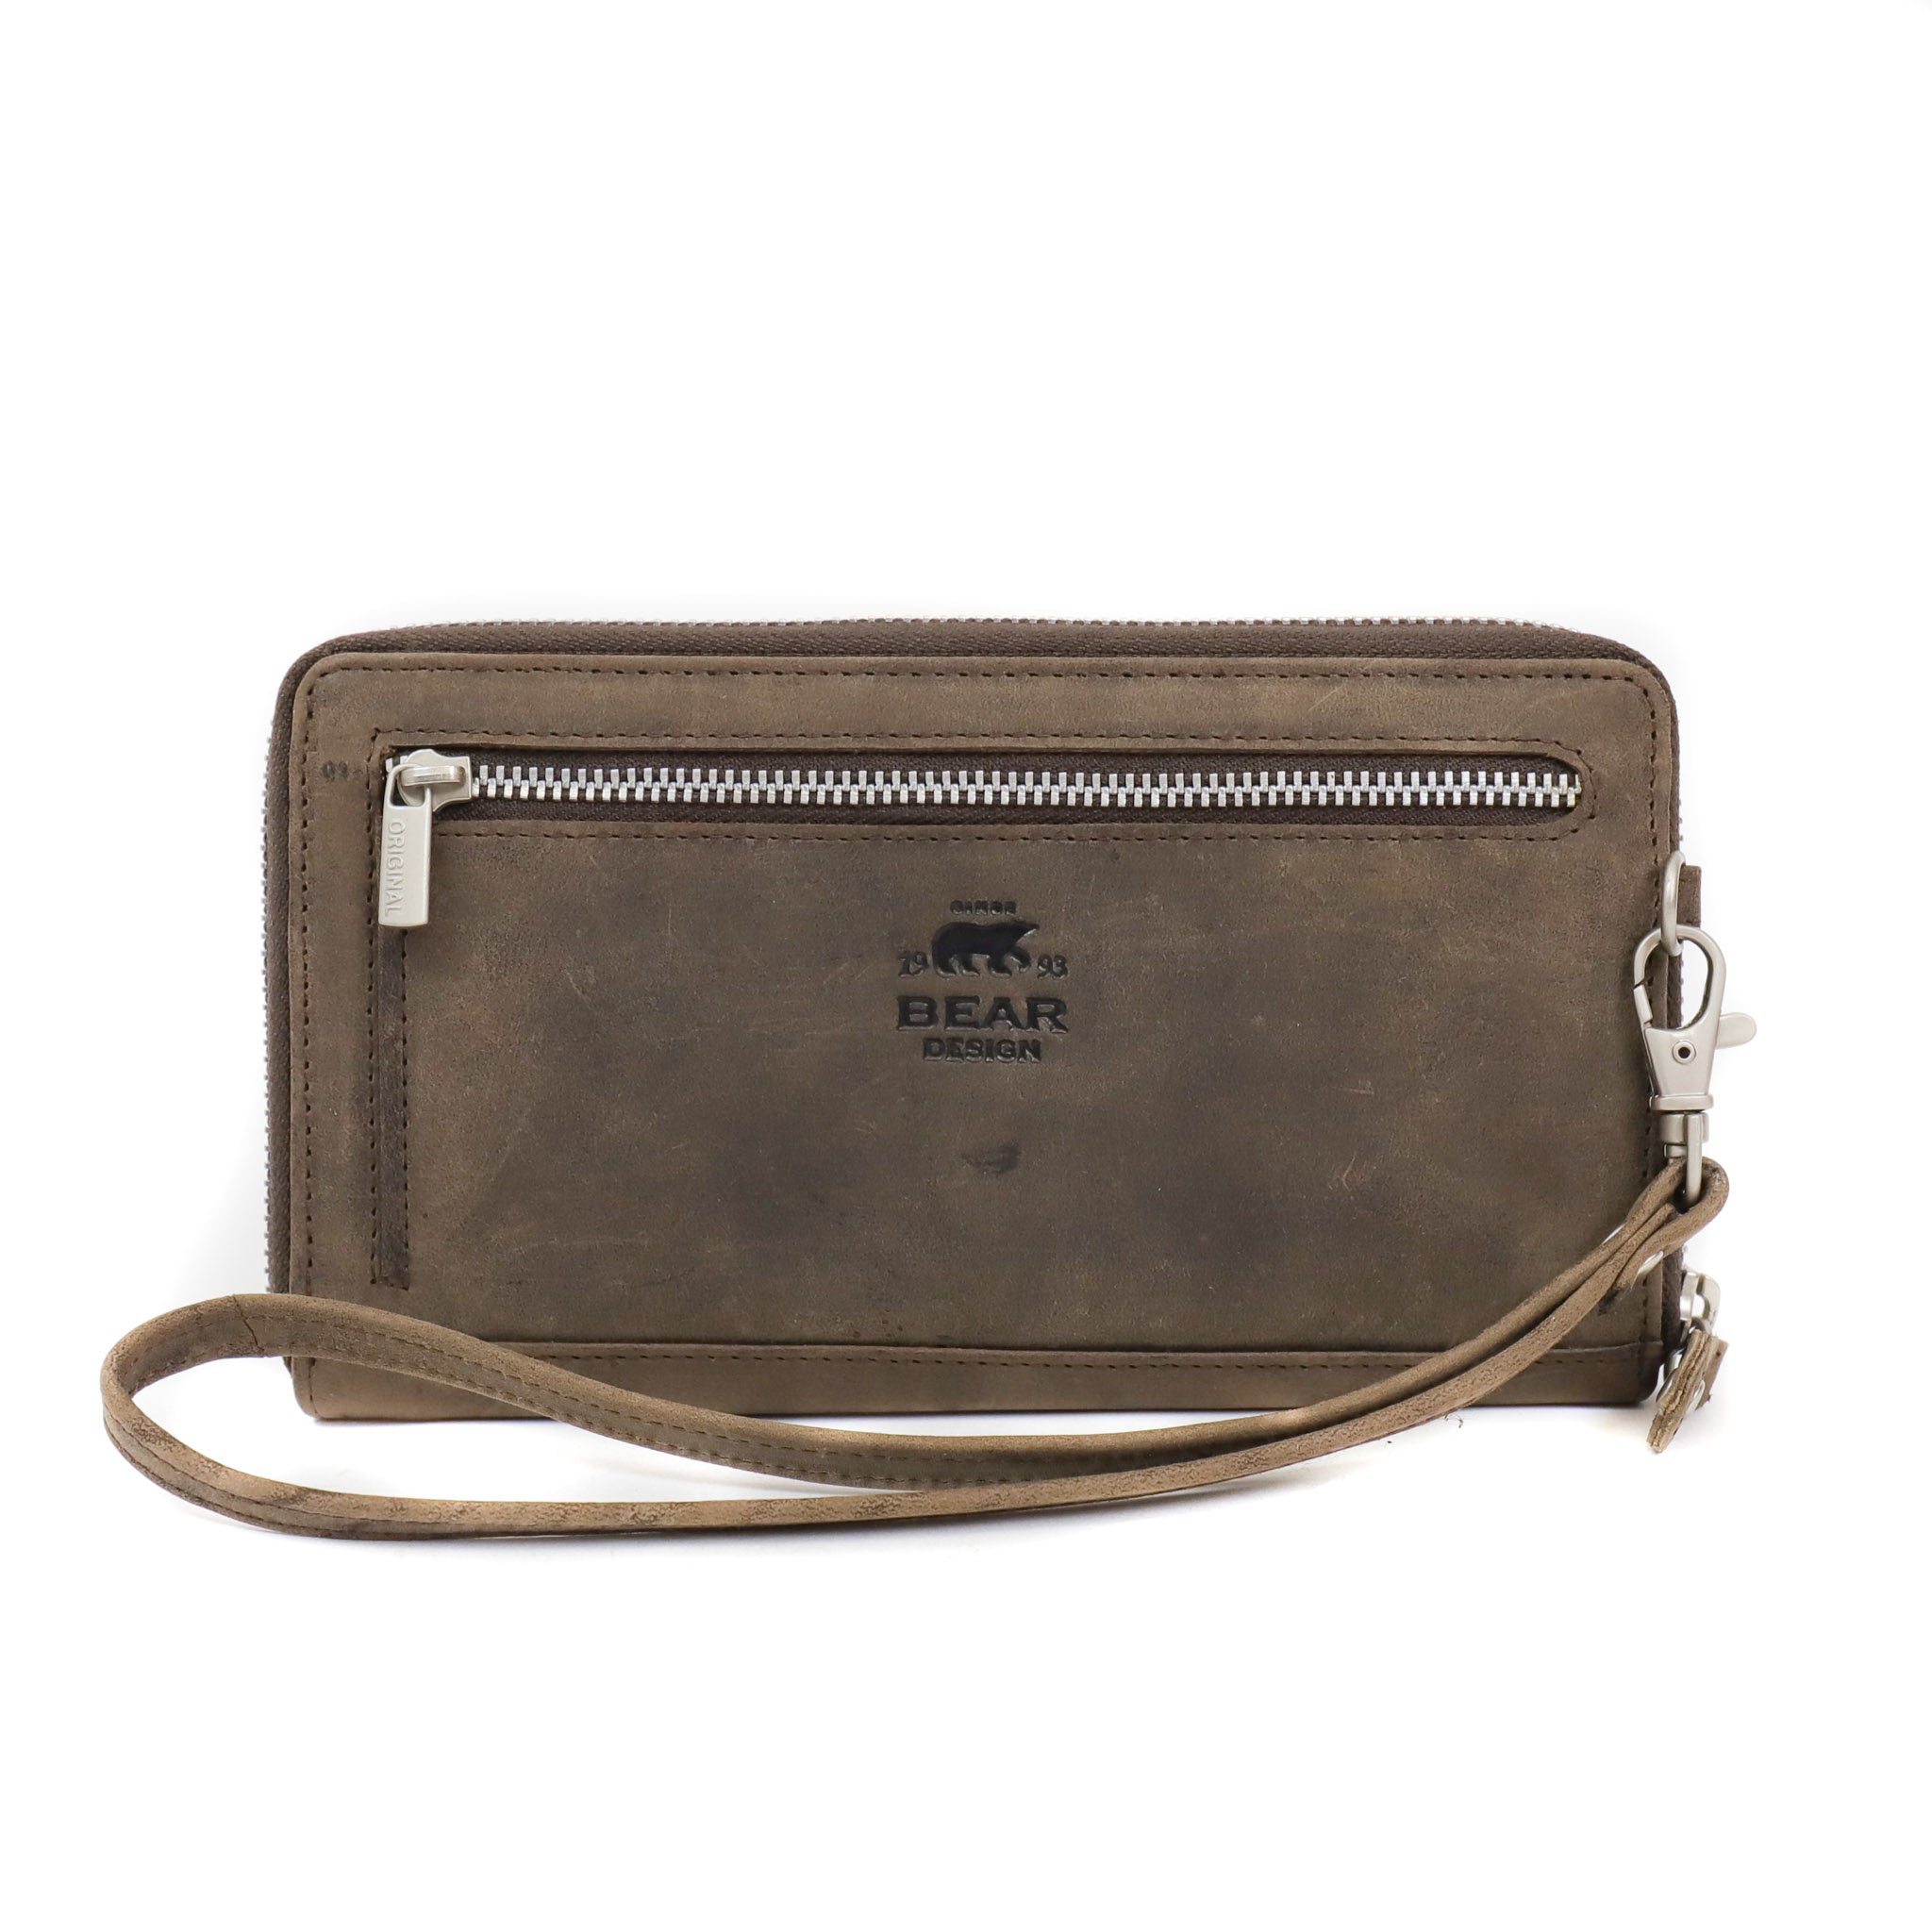 Zipper wallet 'Isa' brown - HD 12569